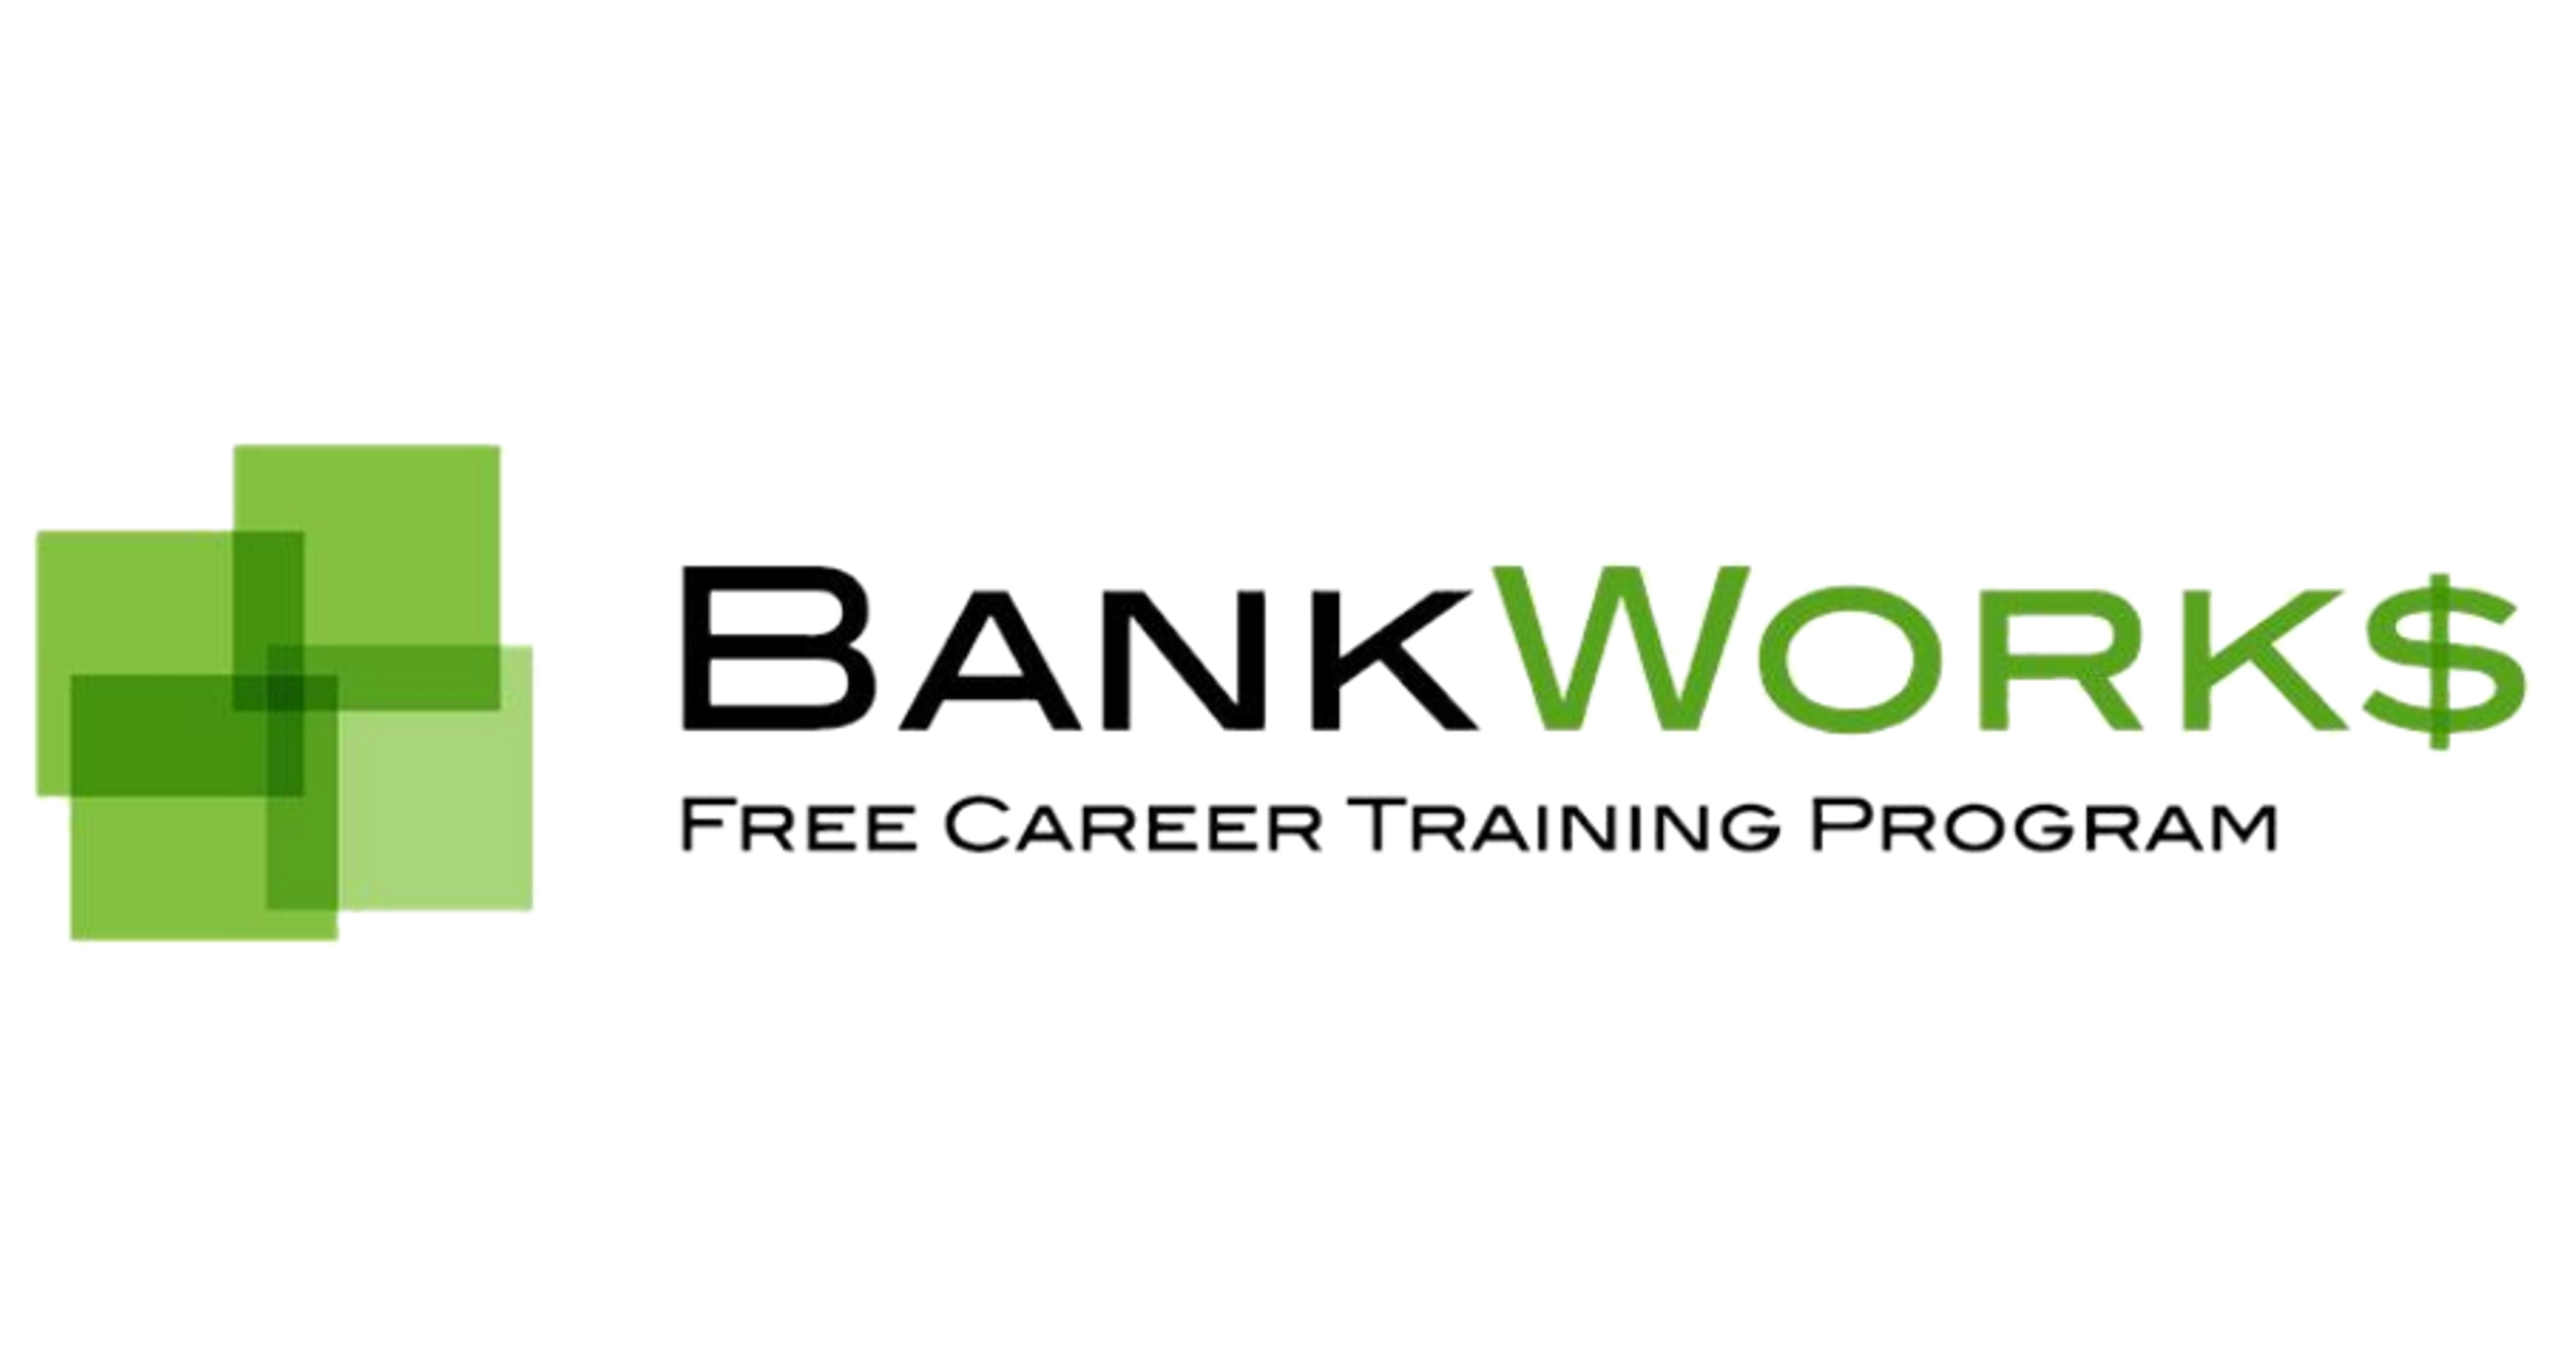 BankWork$ Free Career Training Program 1